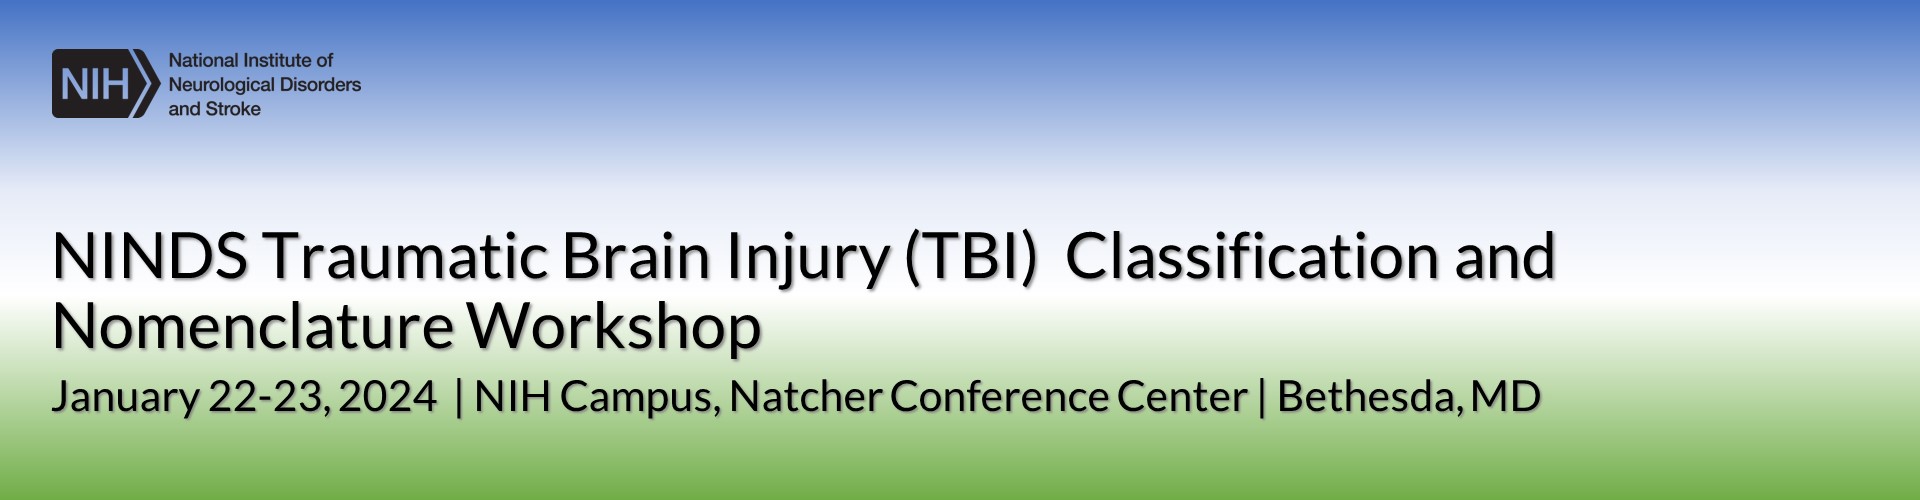 NINDS Traumatic Brain Injury (TBI) Classification and Nomenclature Workshop